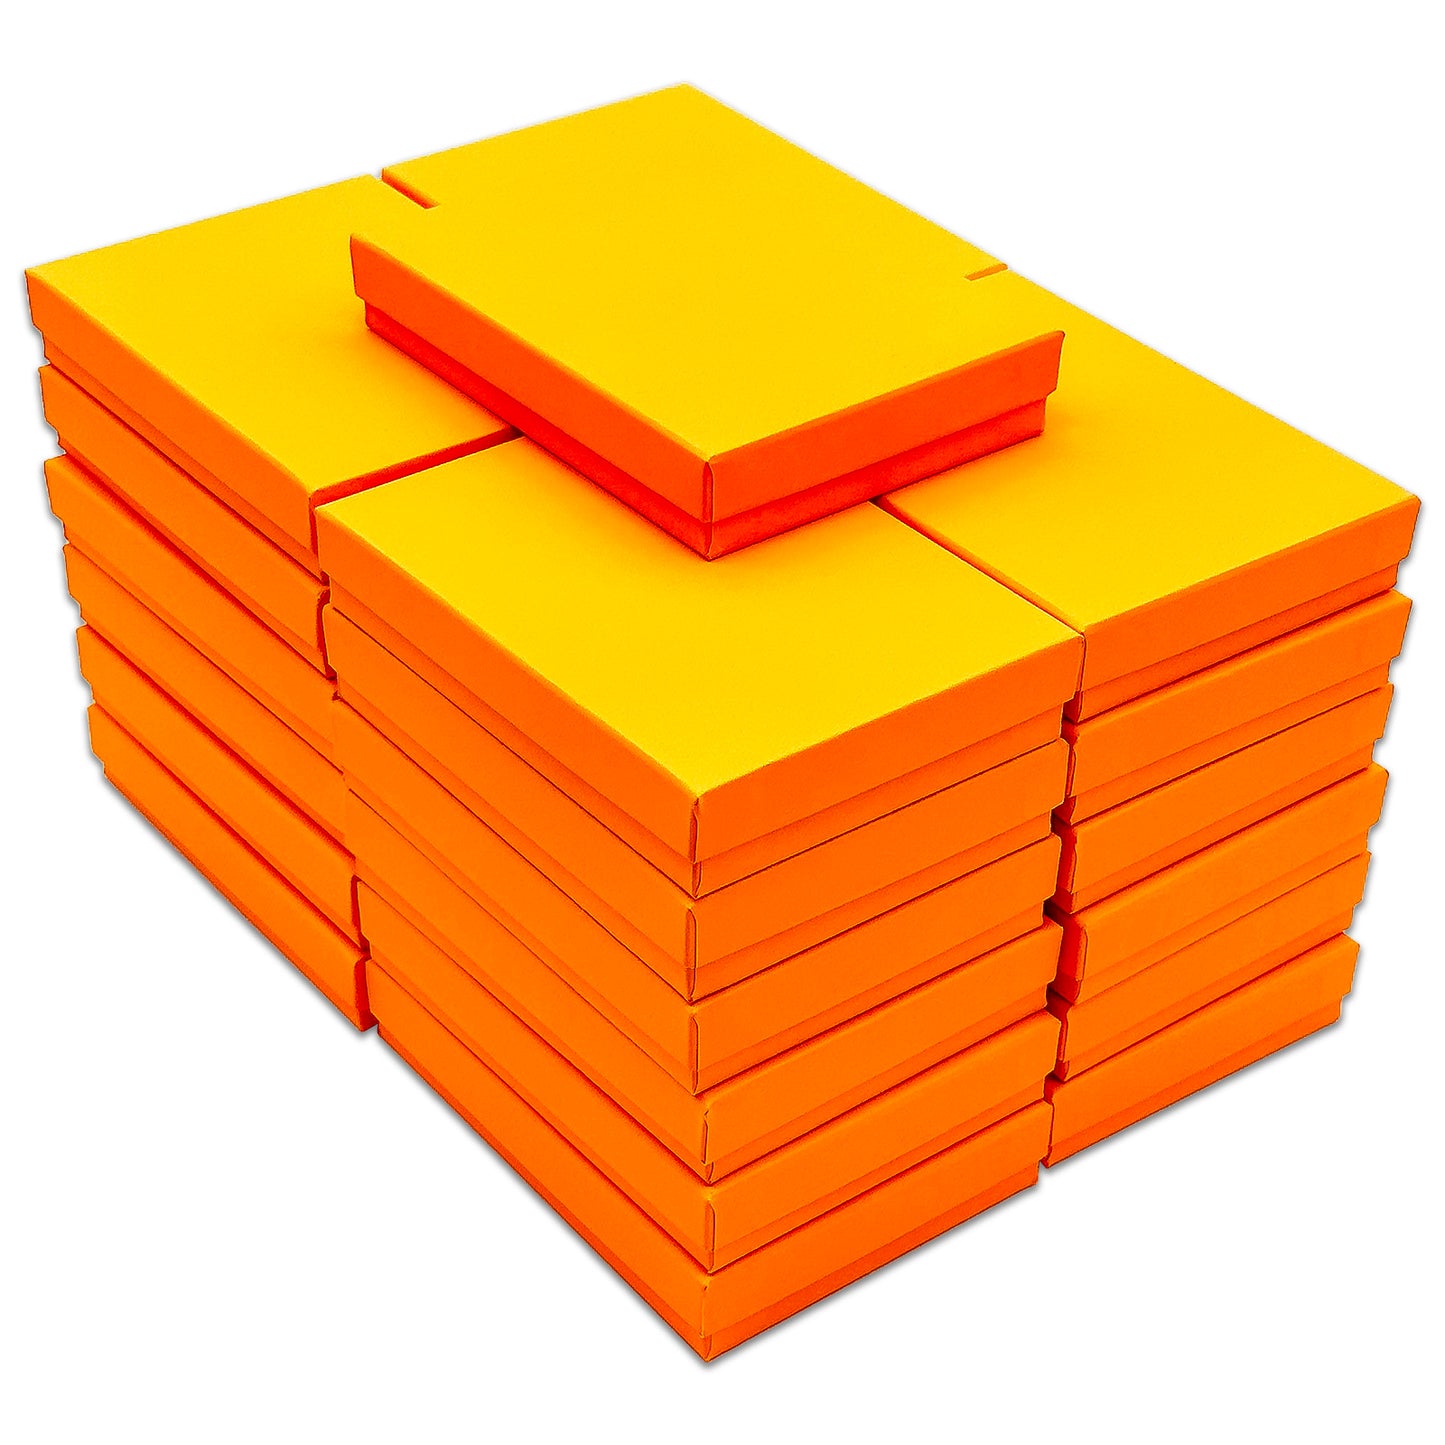 5 7/16" x 3 15/16" x 1" Marigold Cotton Filled Paper Box